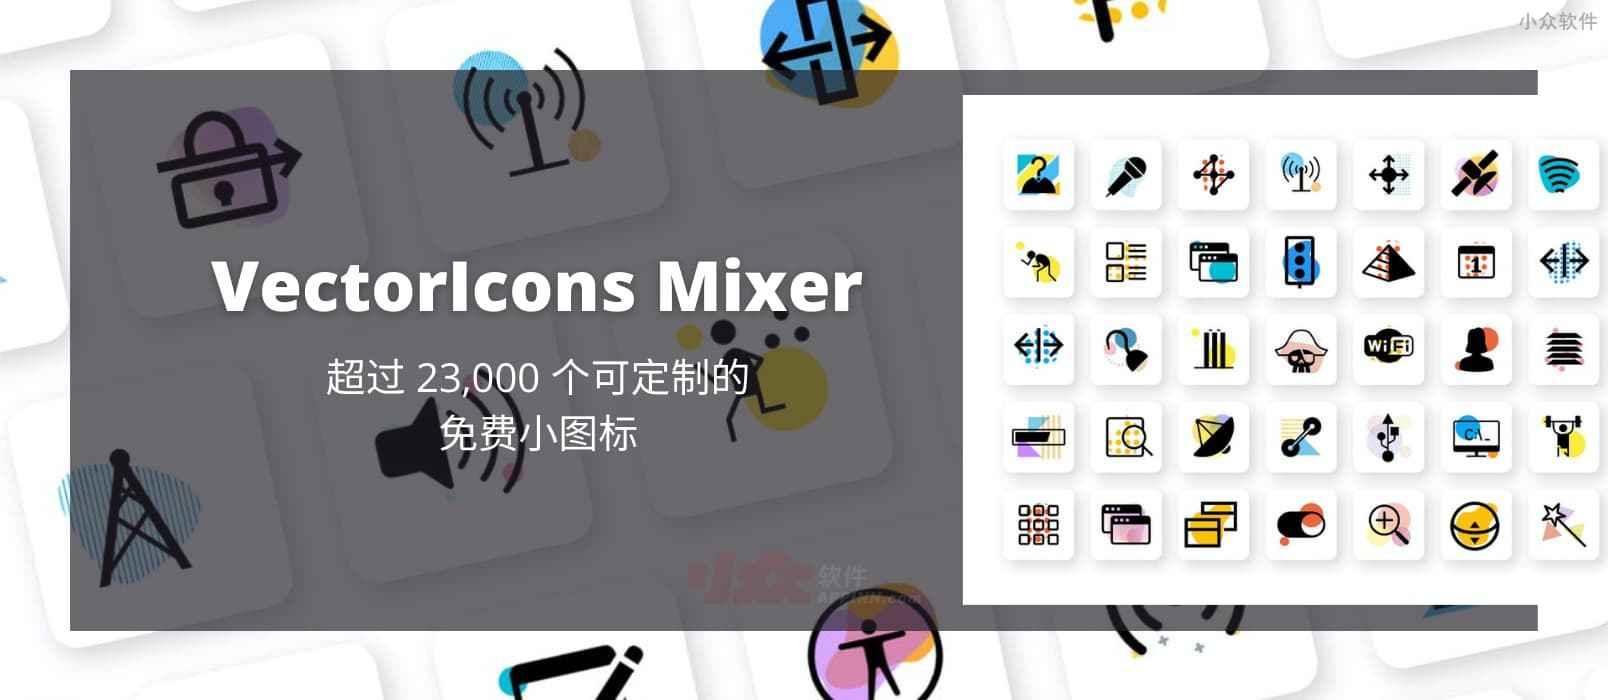 VectorIcons Mixer –  超过 23,000 个可定制的图标